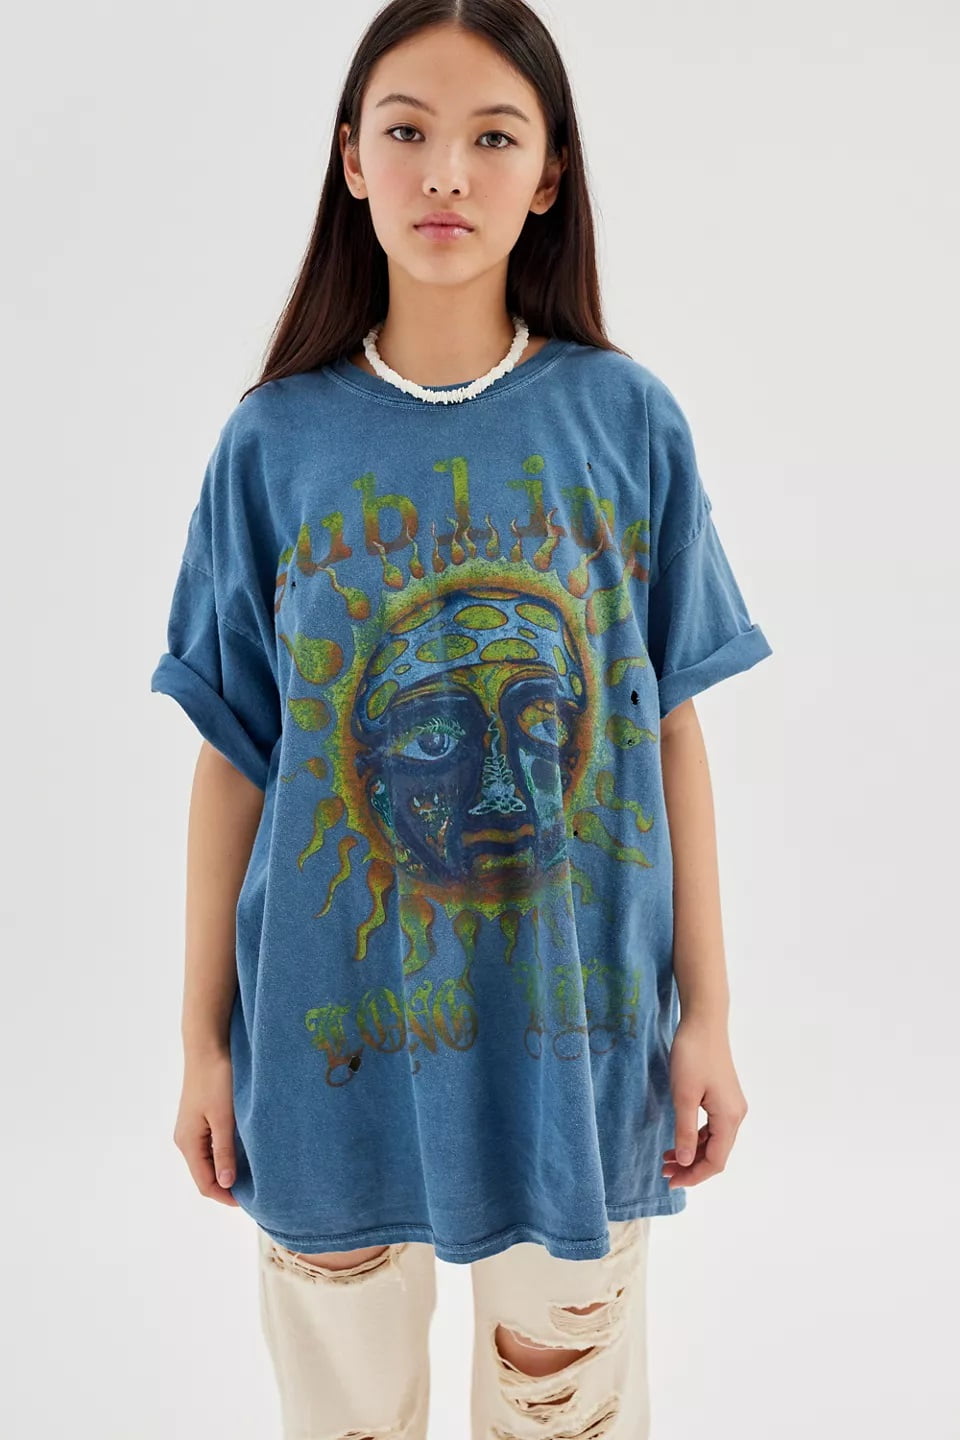 Urban Outfitters Women's X Sublime Distressed Oversized Tee T-Shirt Dress (Small/Medium, Blue) - Walmart.com